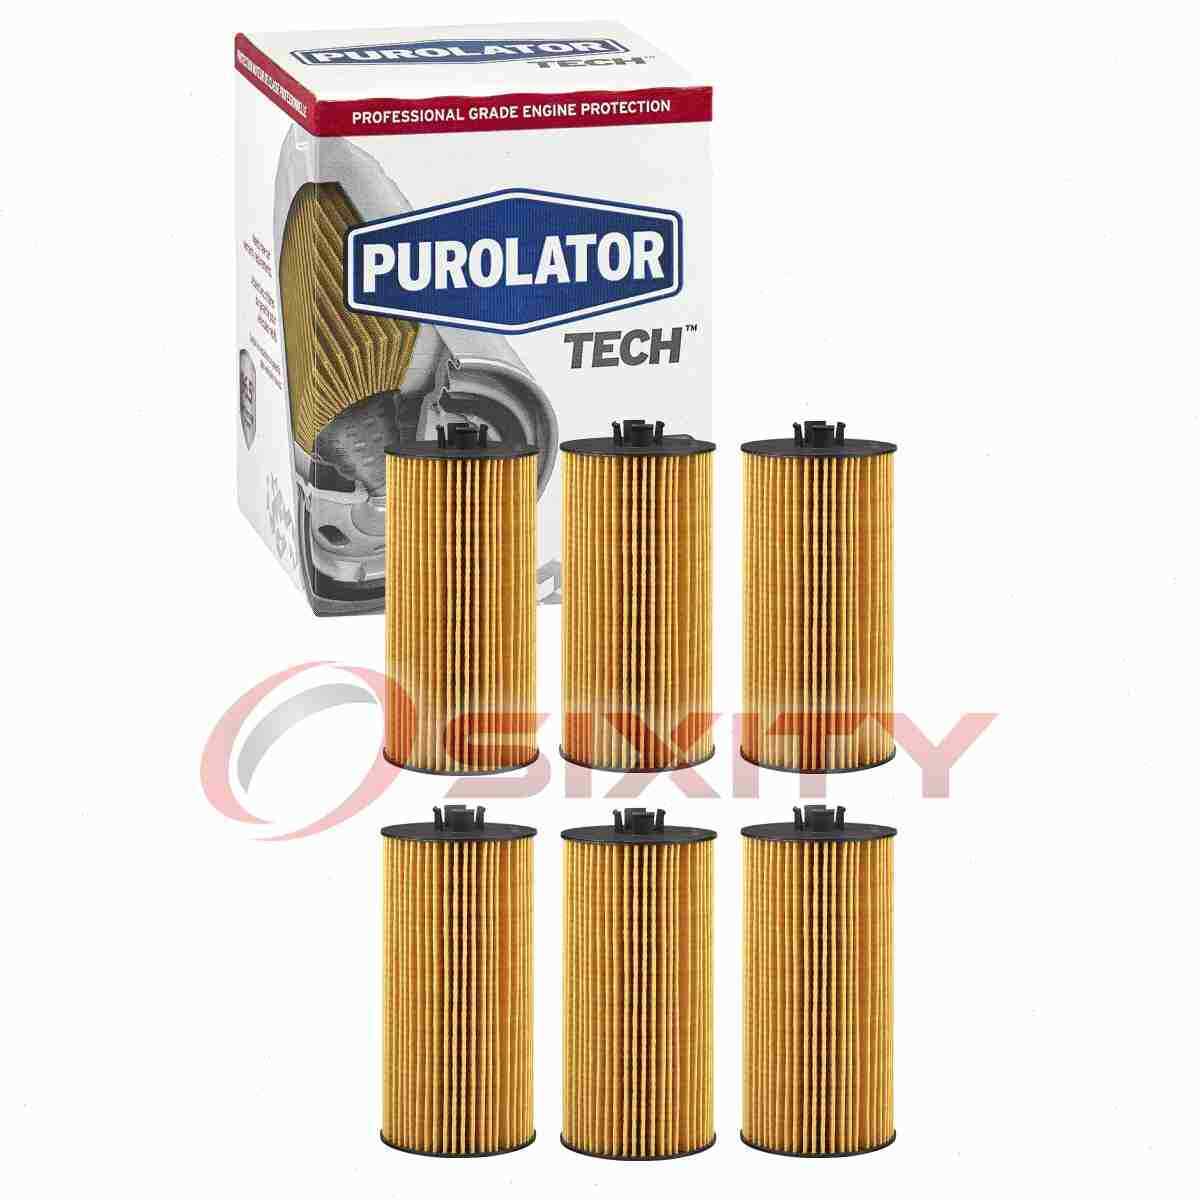 6 pc Purolator TECH TL45526 Engine Oil Filters for X5526 WL10111 V5526 xf